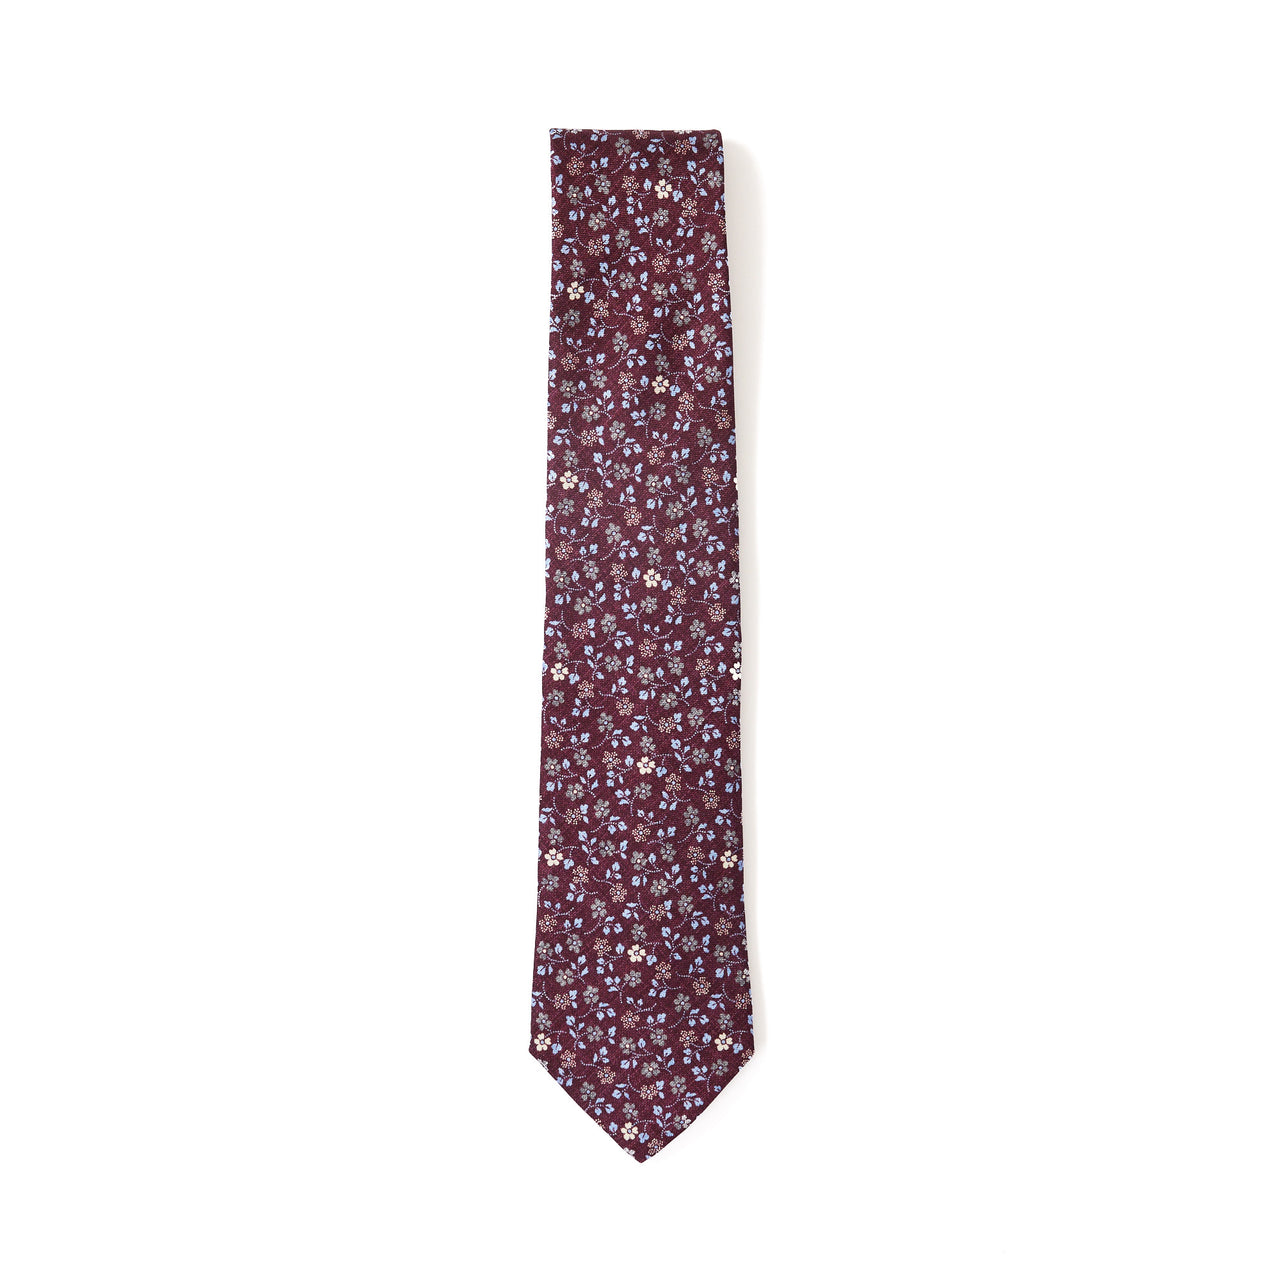 HENRY SARTORIAL 100% Silk Floral Tie RED